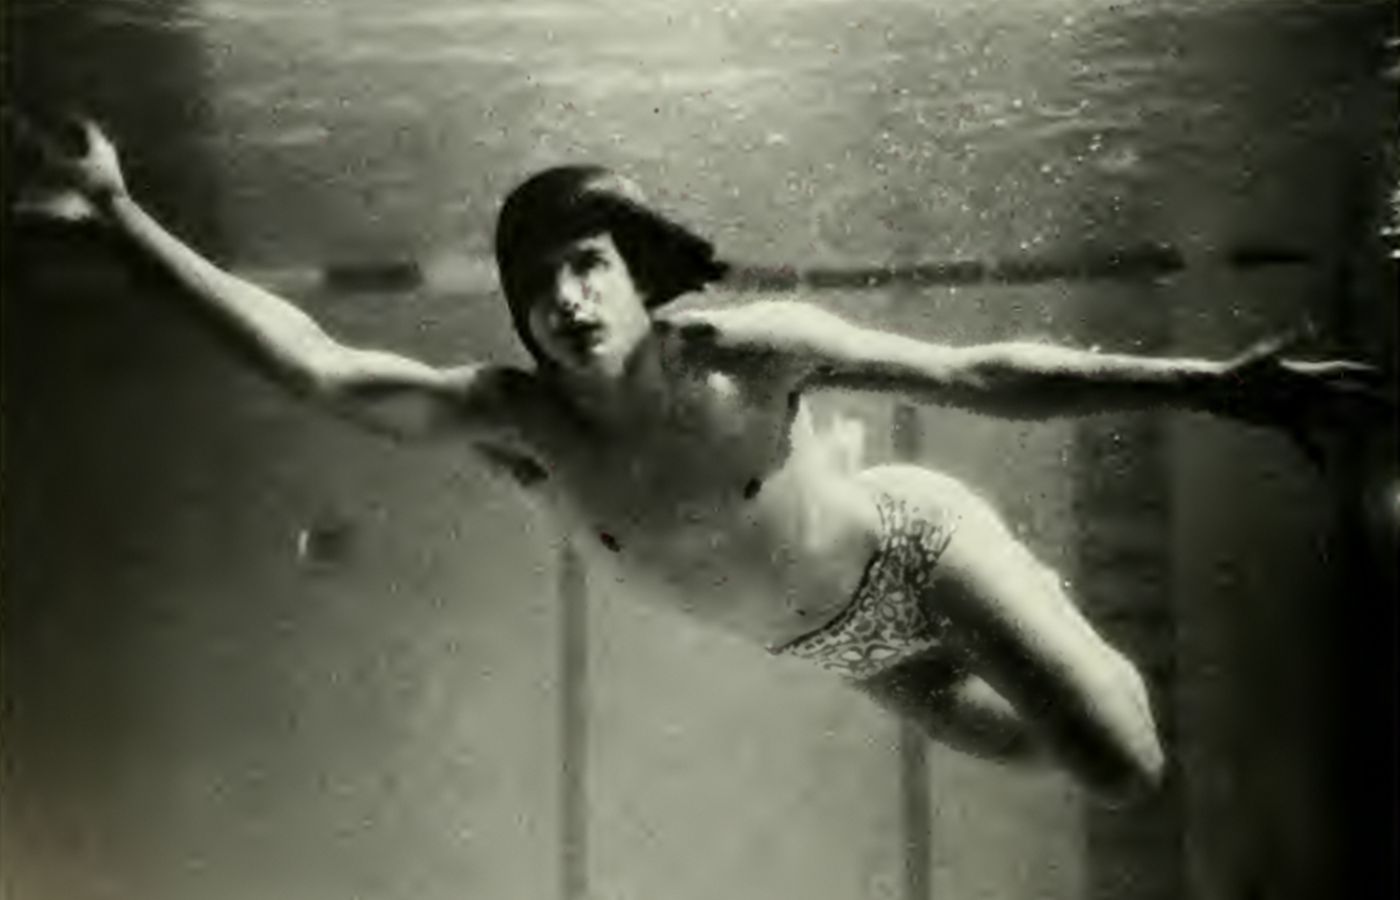 A photo taken underwater of VCU student Edwin Slipek in the 1973 yearbook